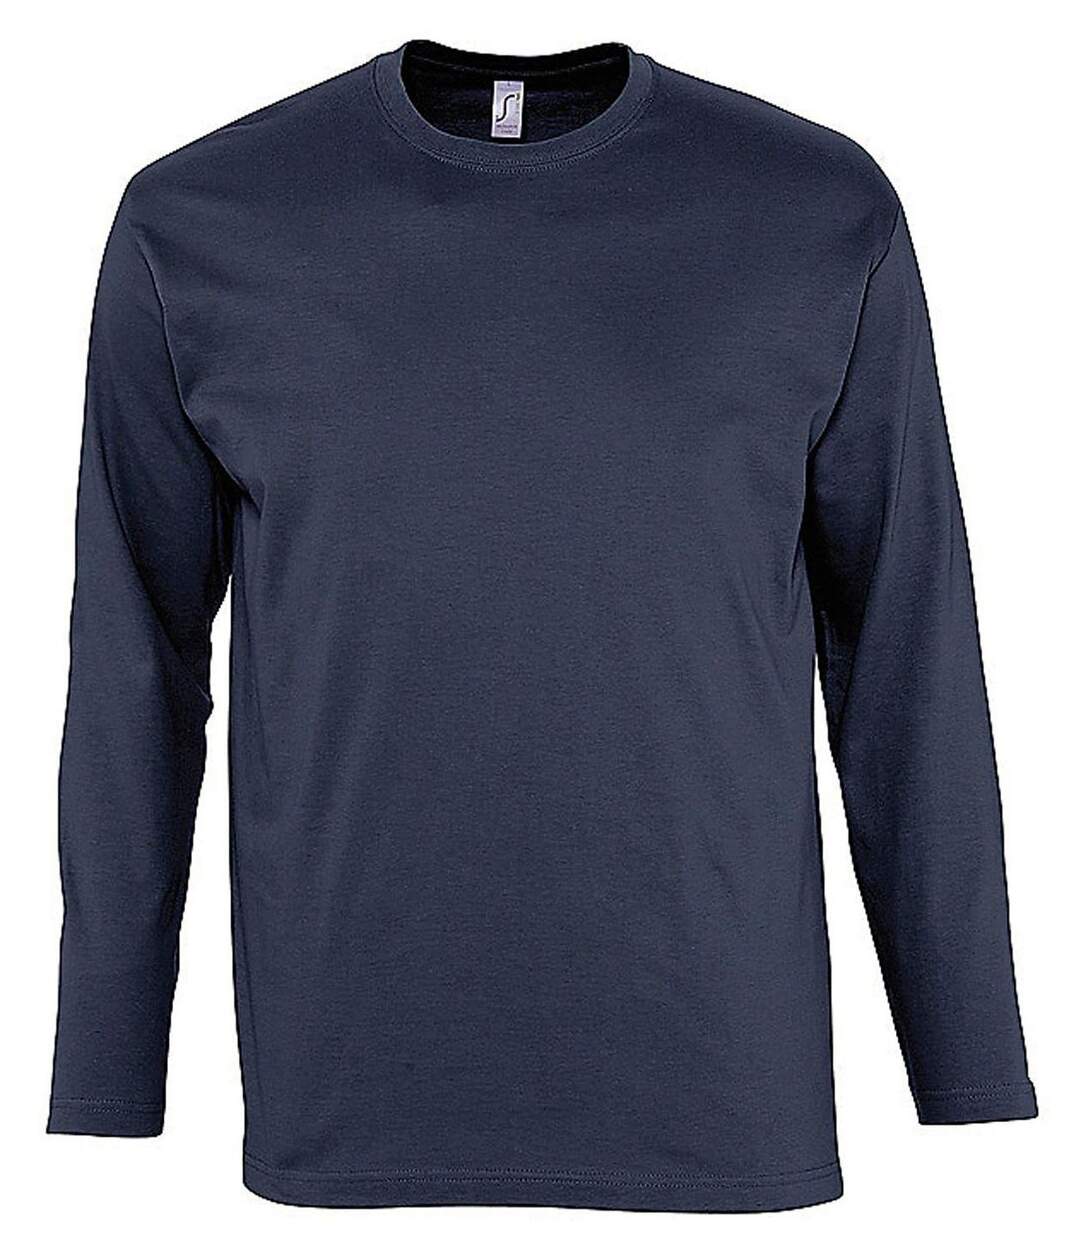 T-shirt manches longues HOMME - 11420 - bleu marine